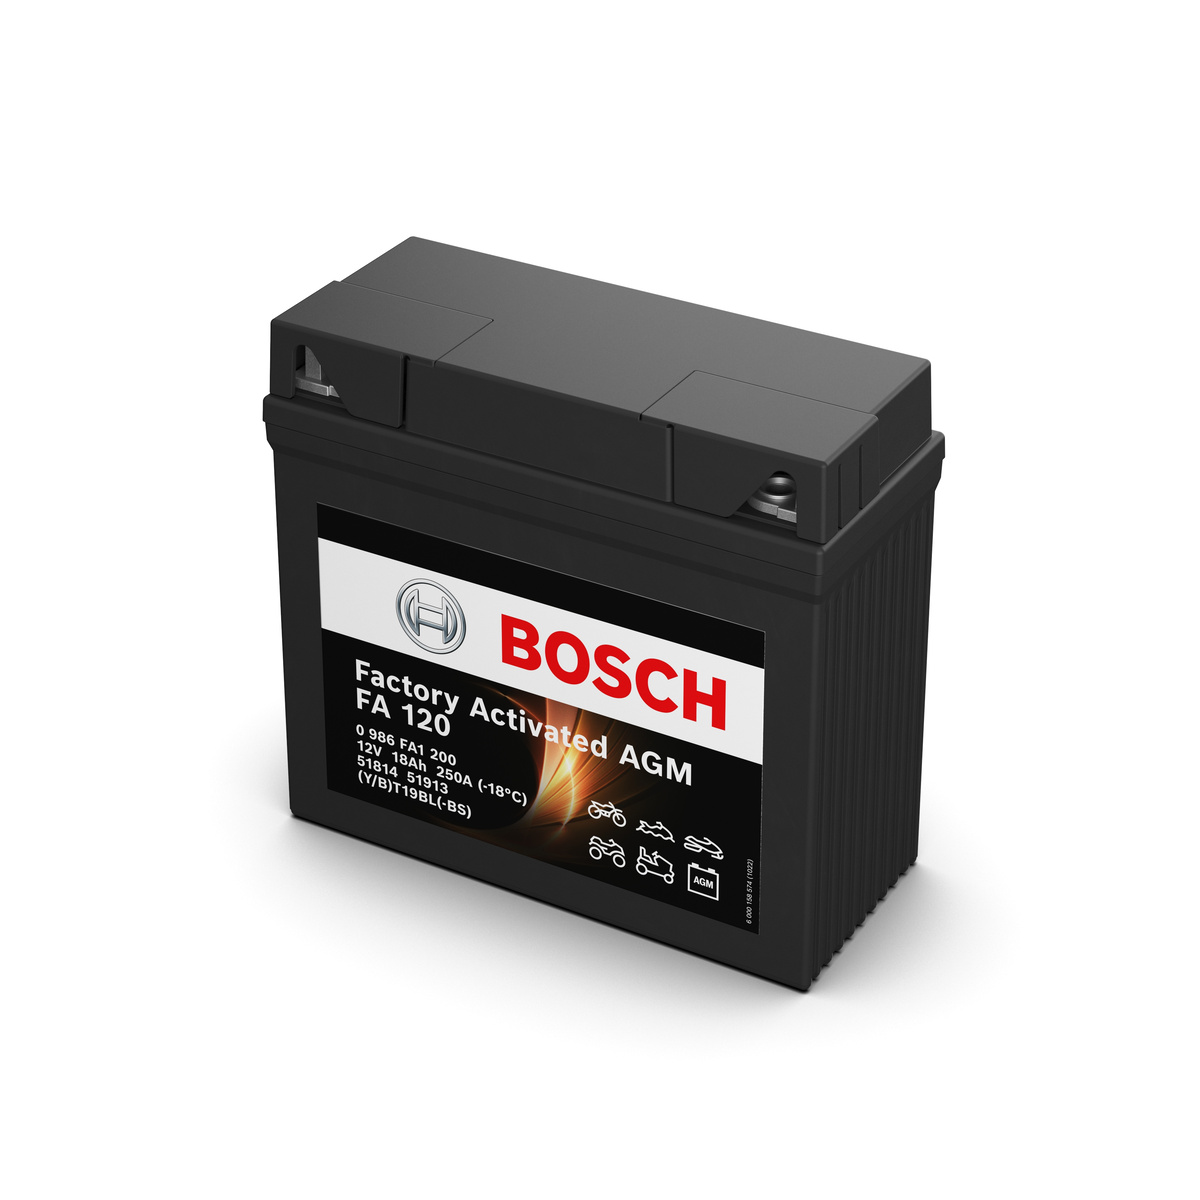 Batterie moto BOSCH FA120 AGM 12V 18ah 250A 51913 51814 YT19B-BS